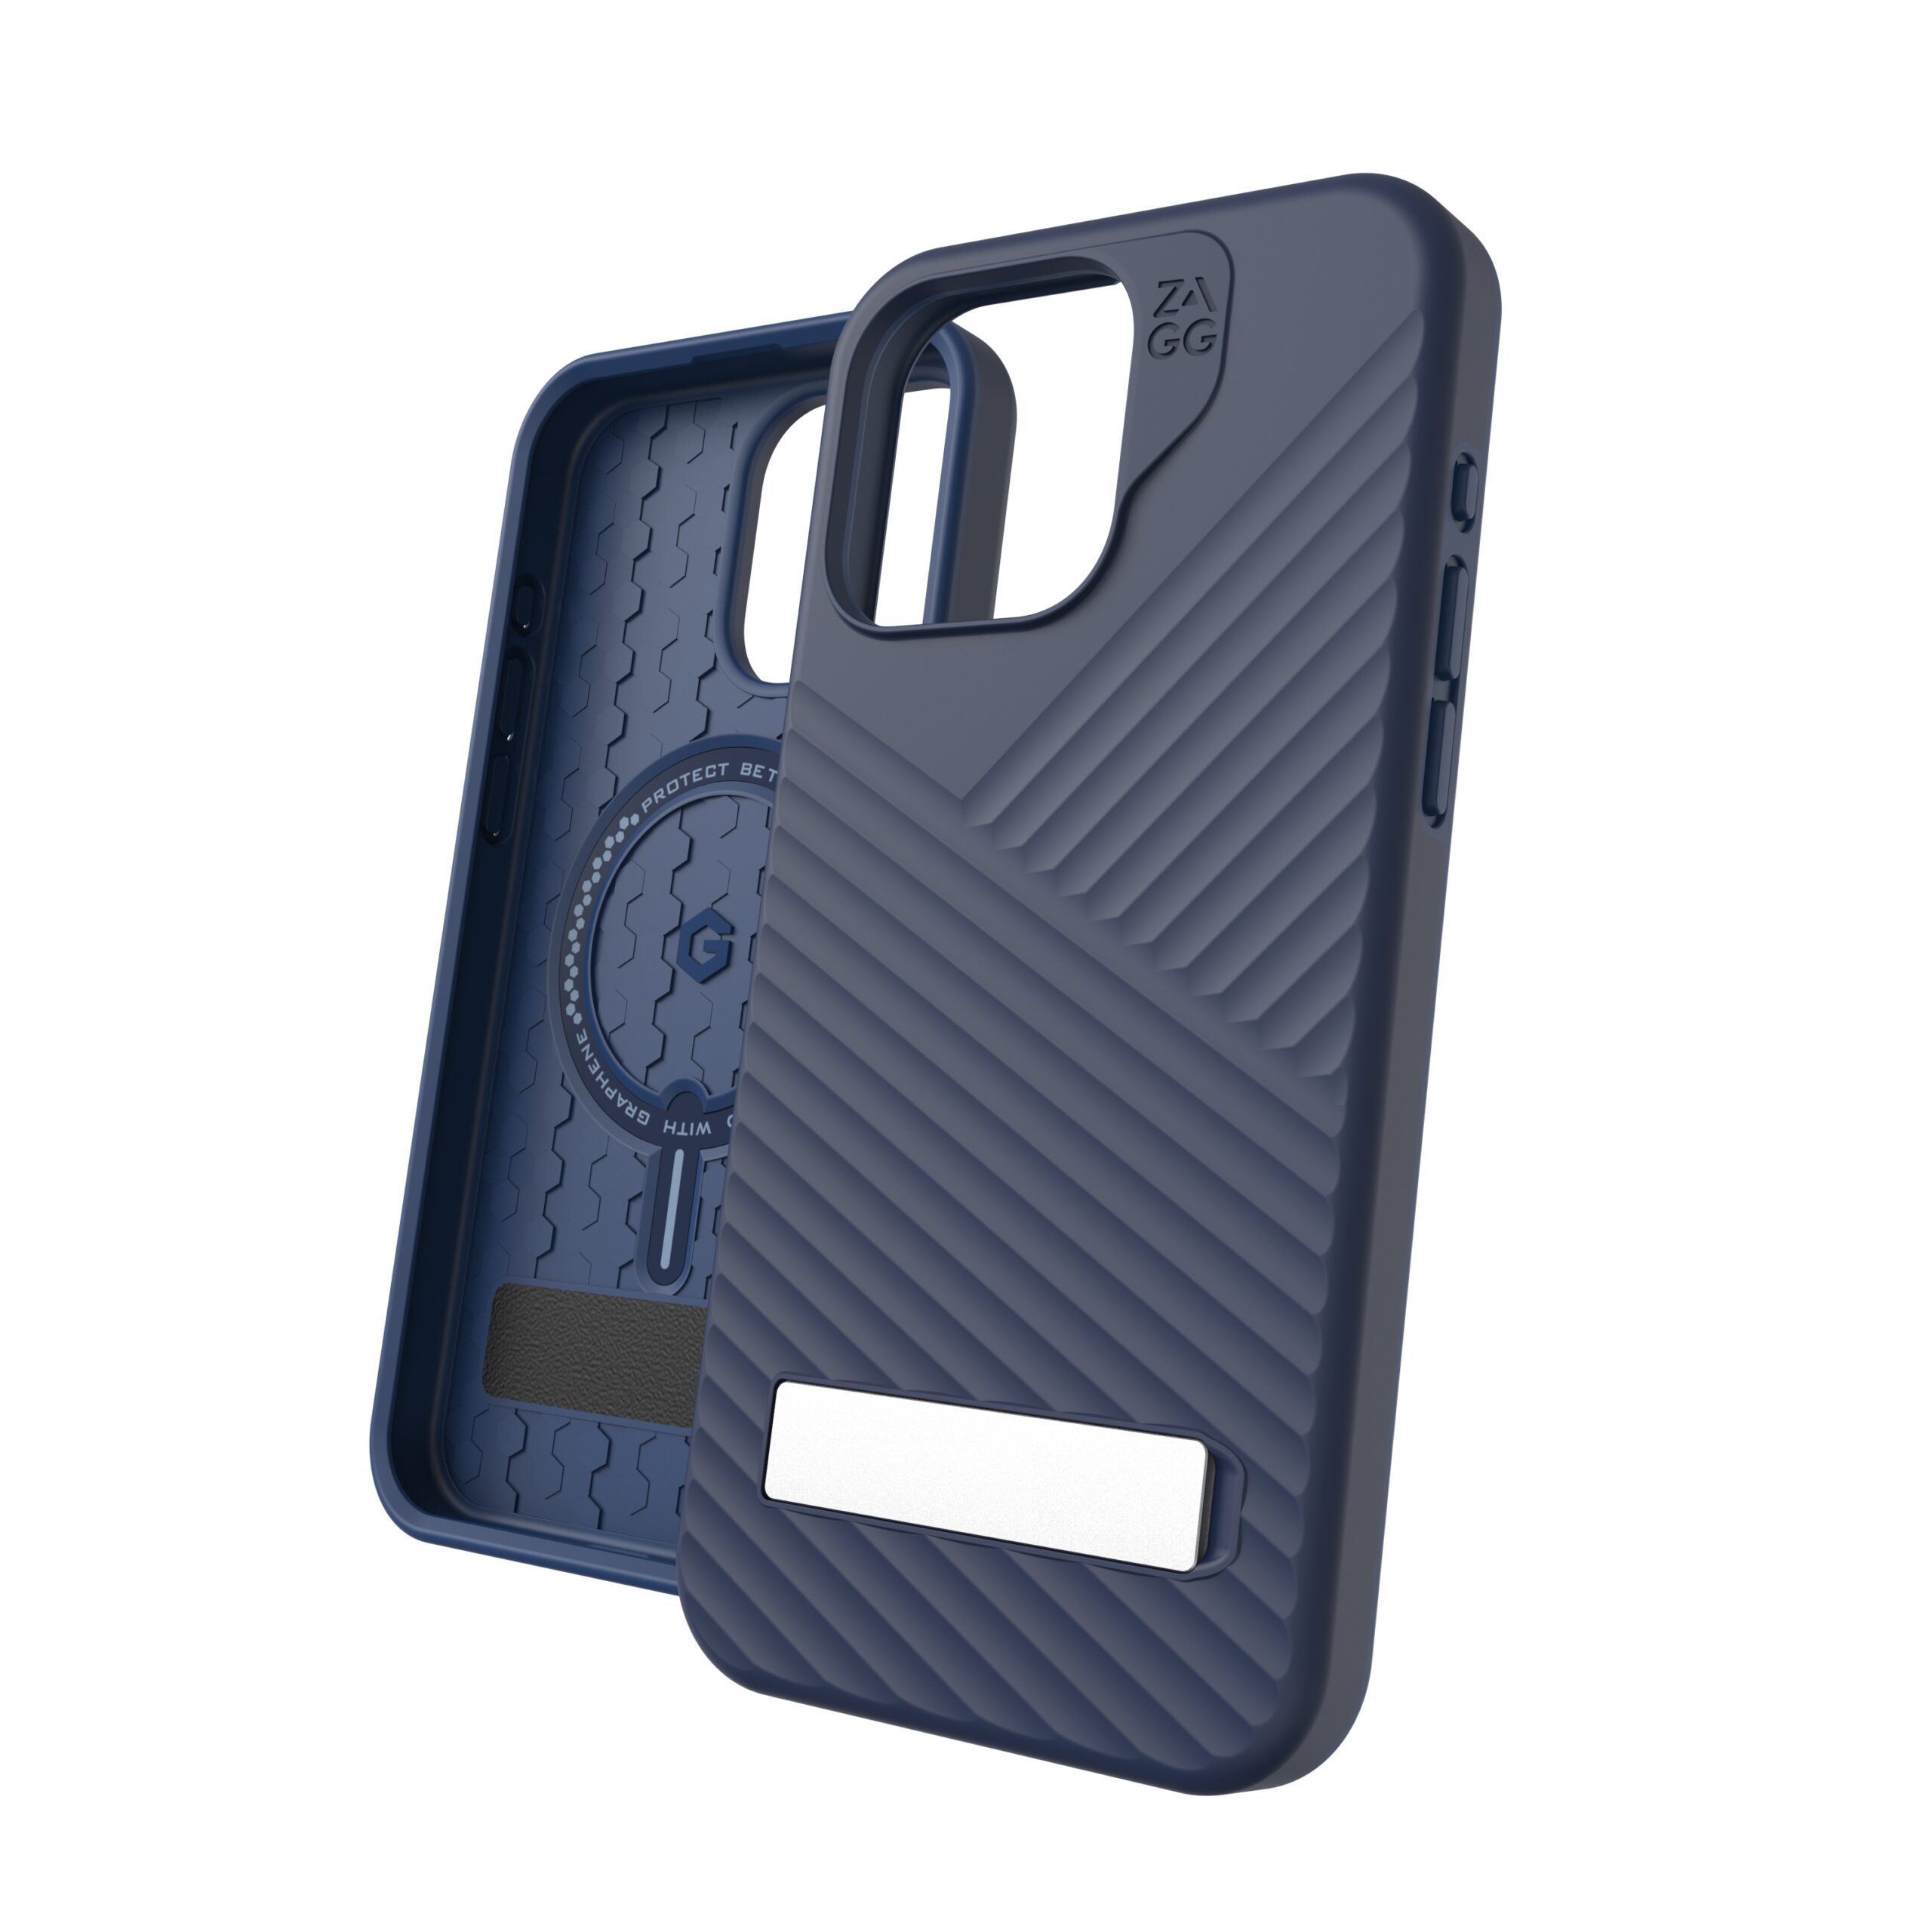 ZAGG รุ่น Denali Snap with Kick Stand - เคส iPhone 15 Pro Max - สี Navy